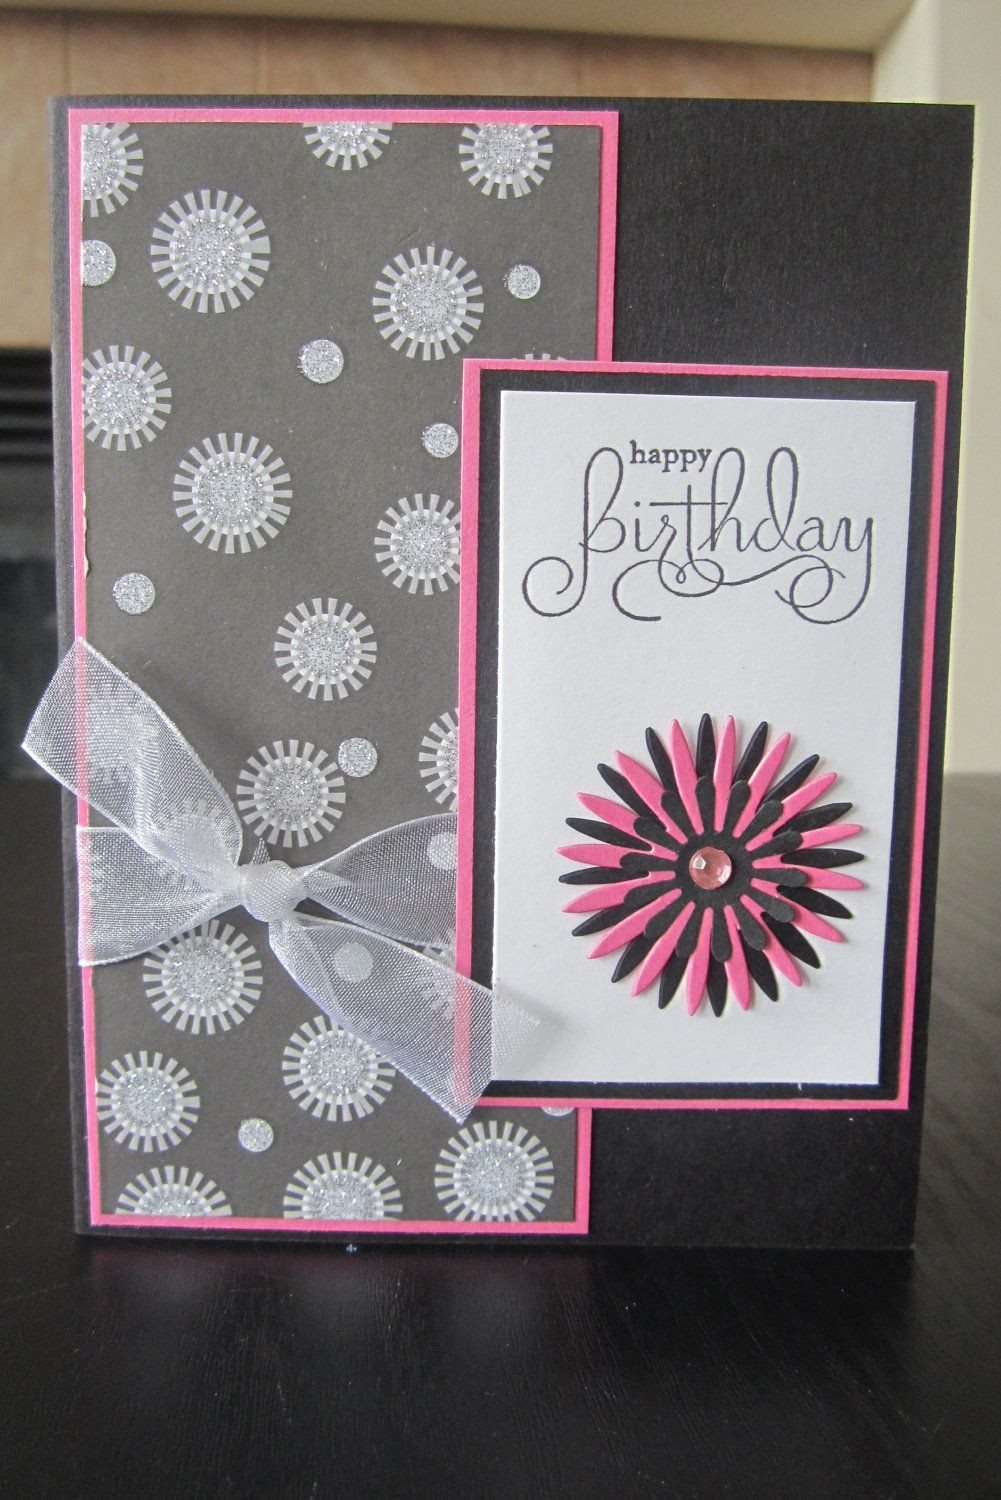 Pinterest Birthday Cards
 Happy Birthday Glitter handmade greeting Card $2 00 via